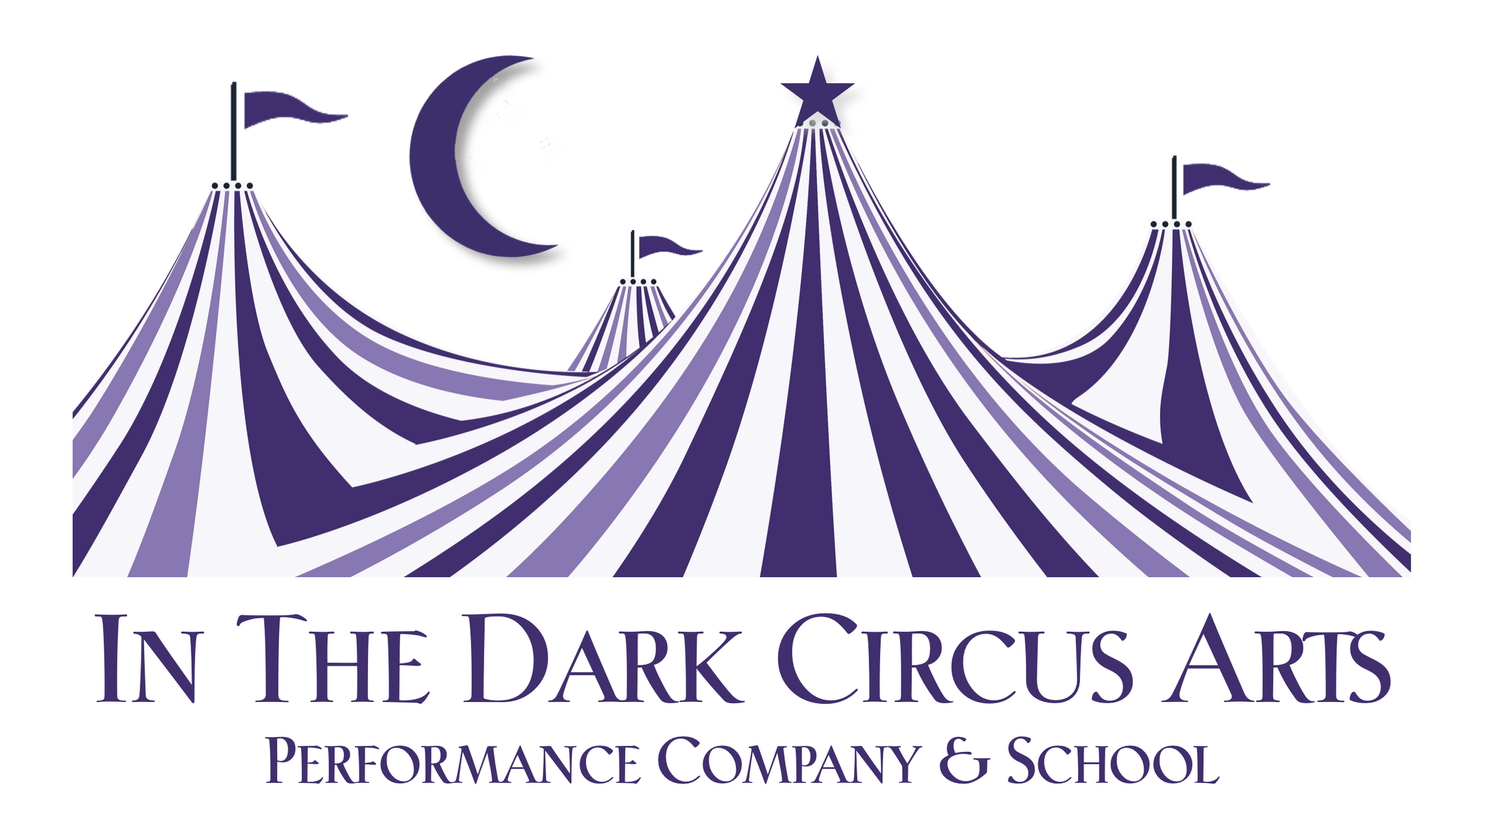 In the Dark Circus Arts